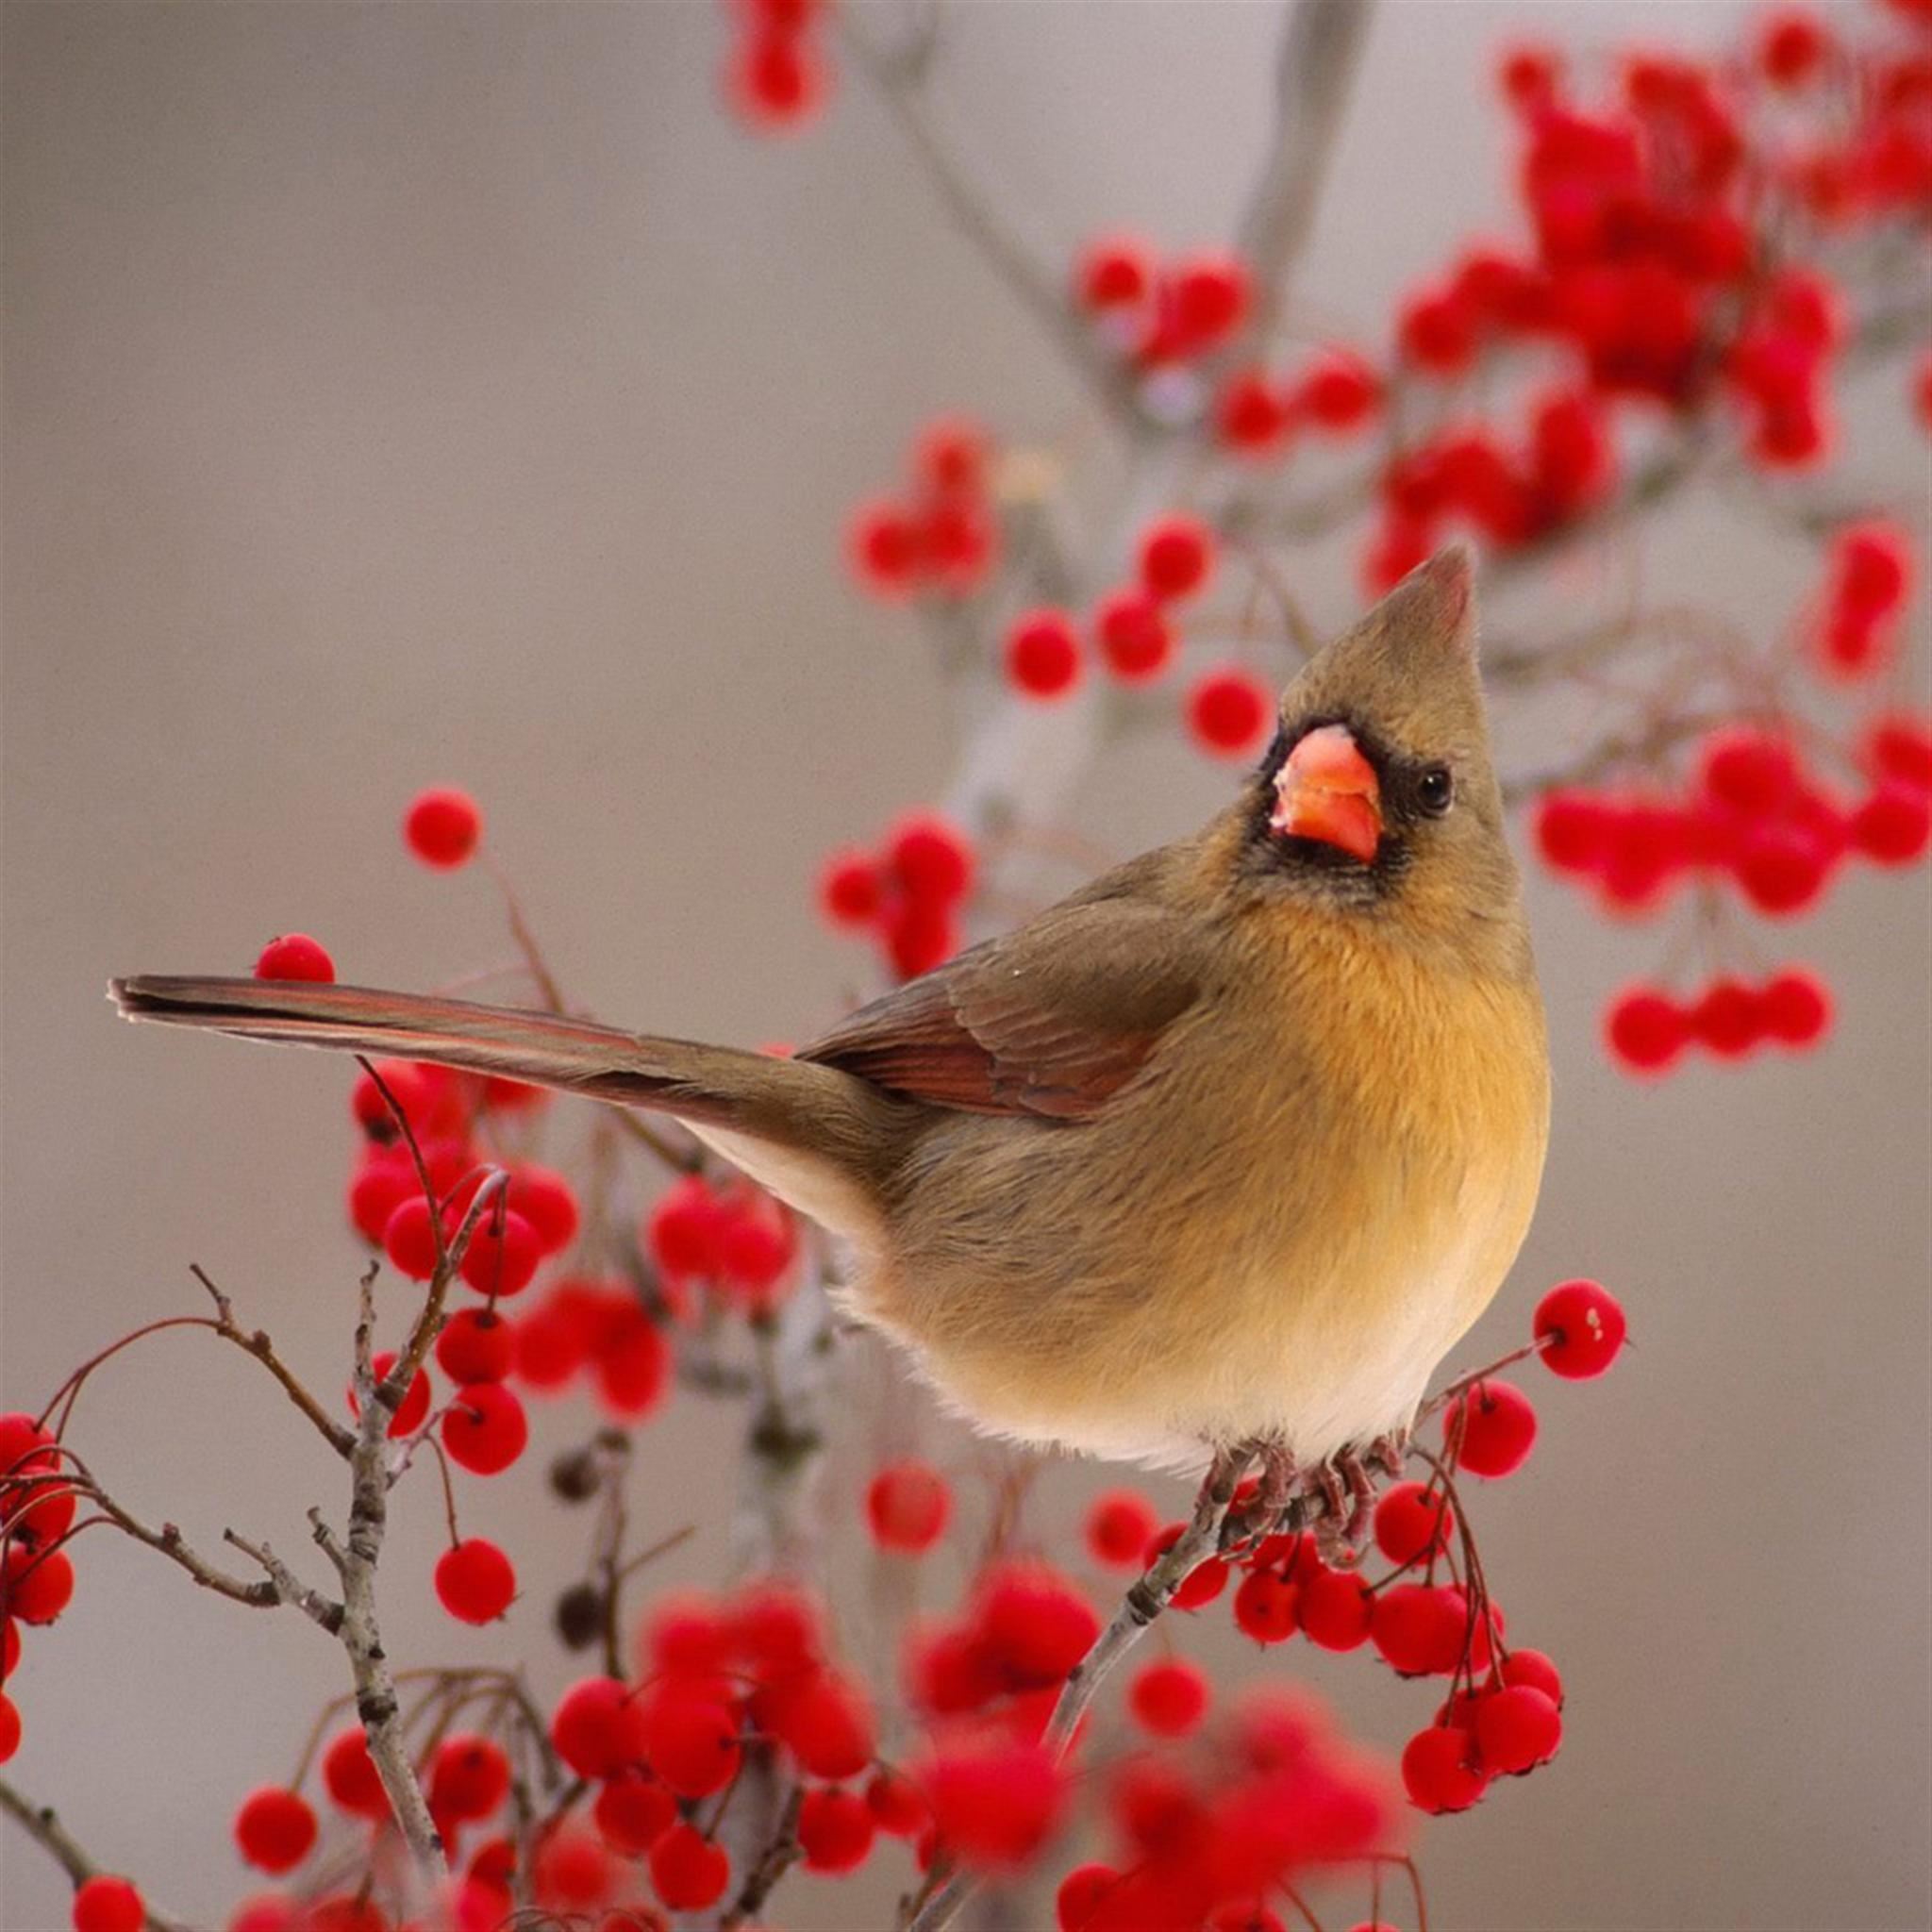 Nature Winter Bird On Wild Red Fruit iPad Air Wallpaper Free Download